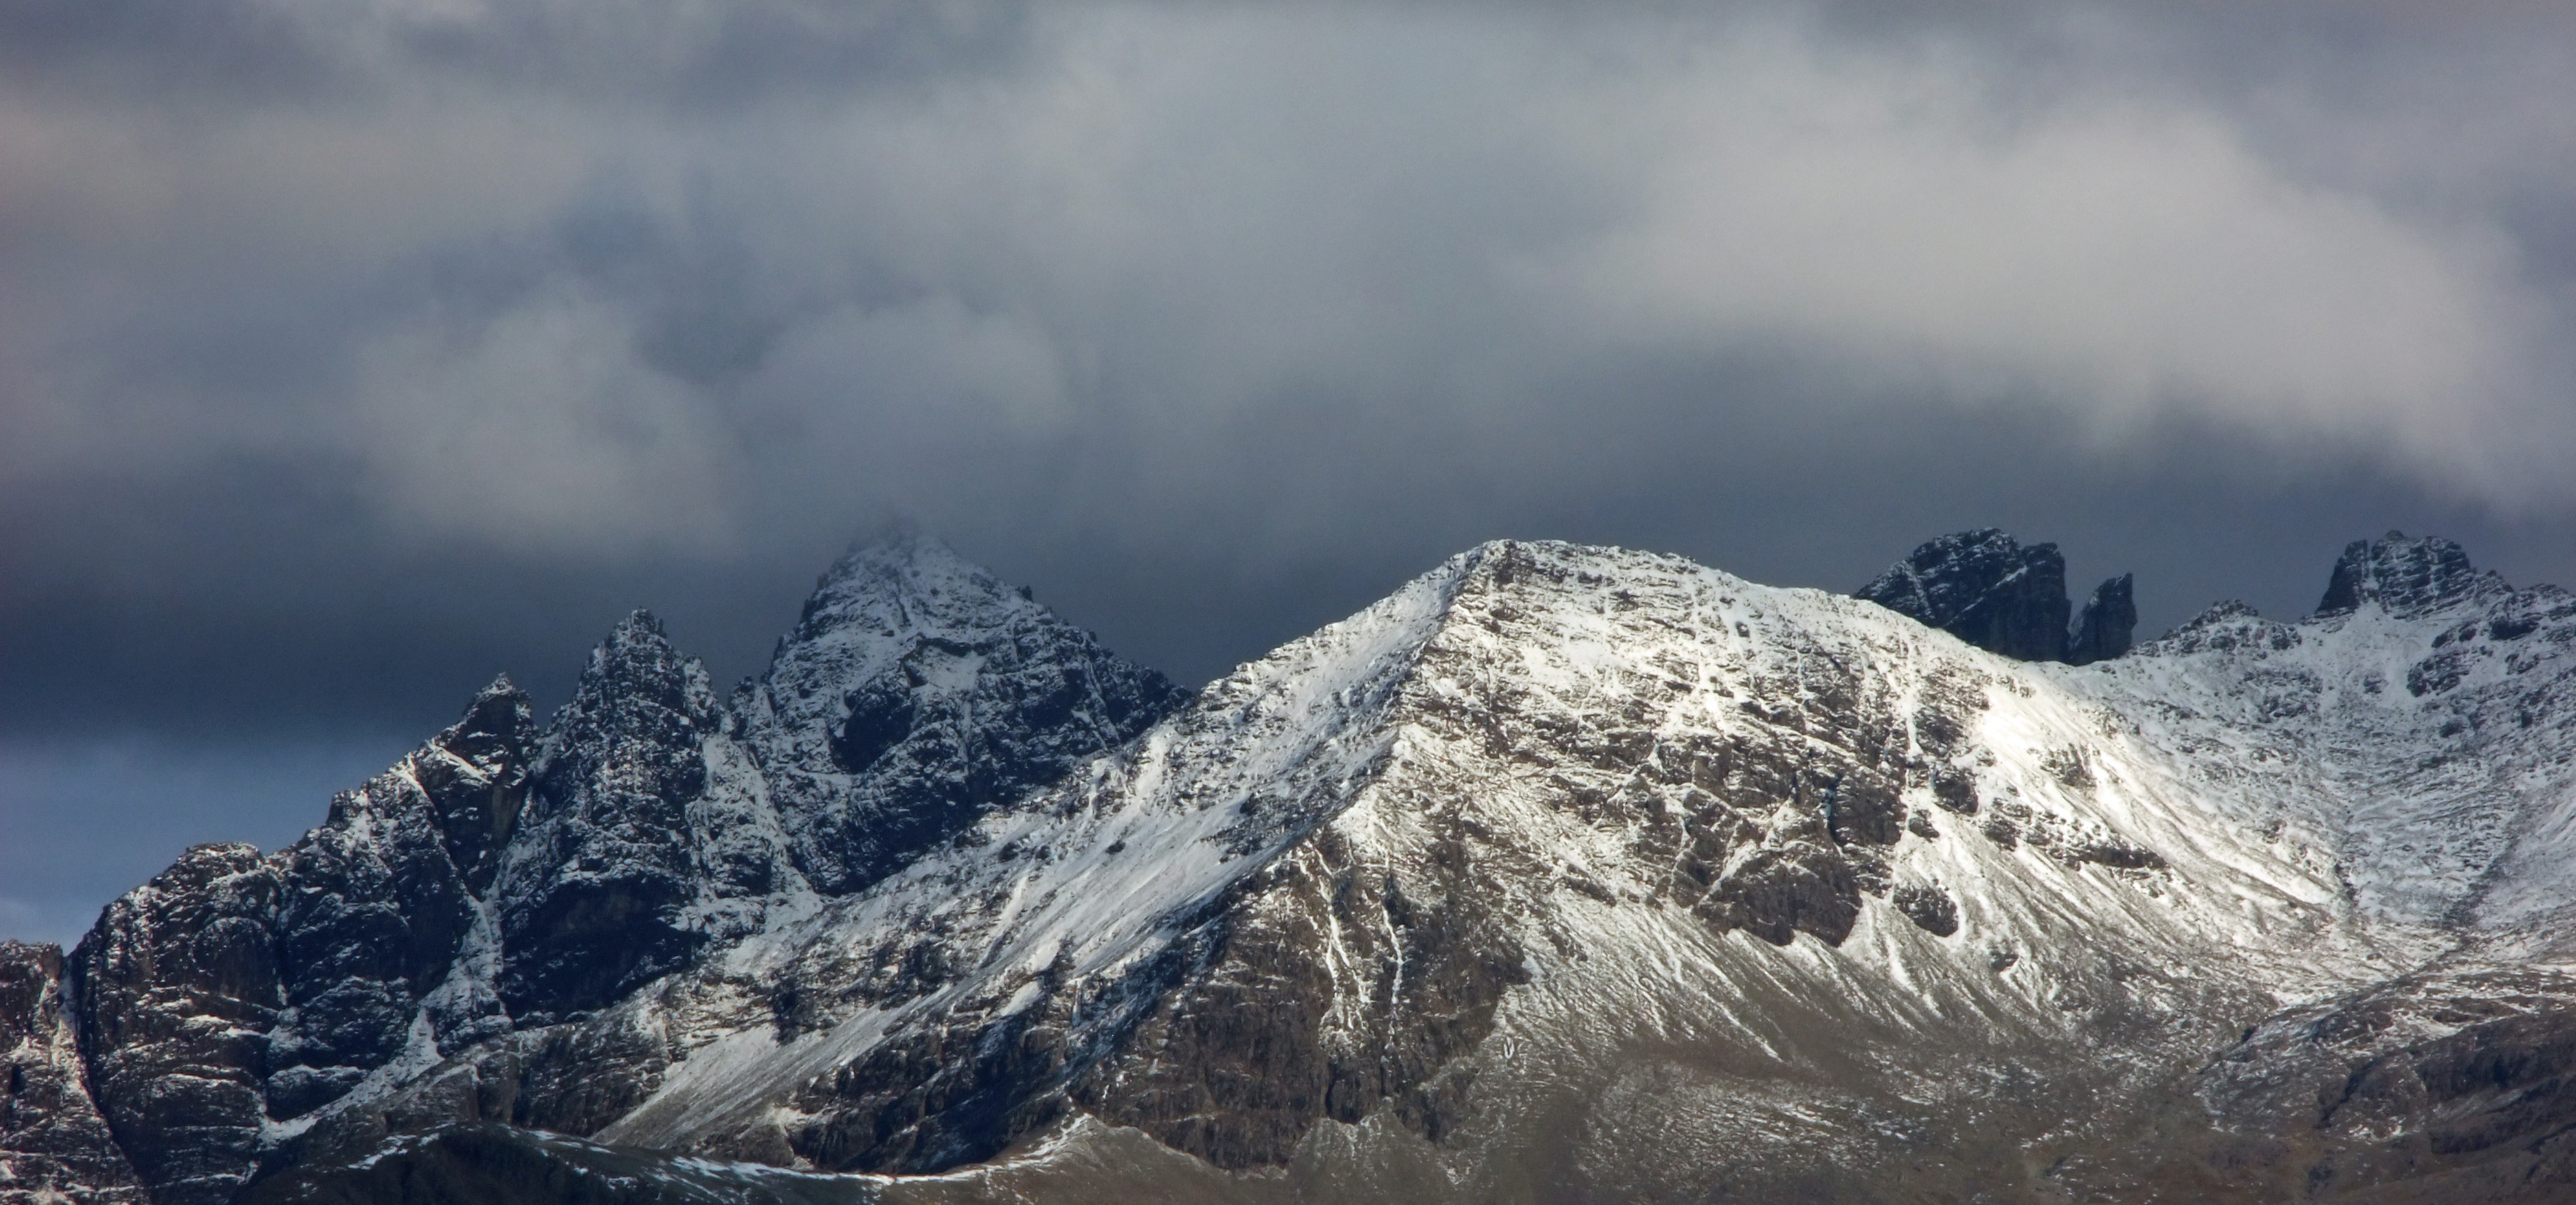 A snowy Scottish mountain